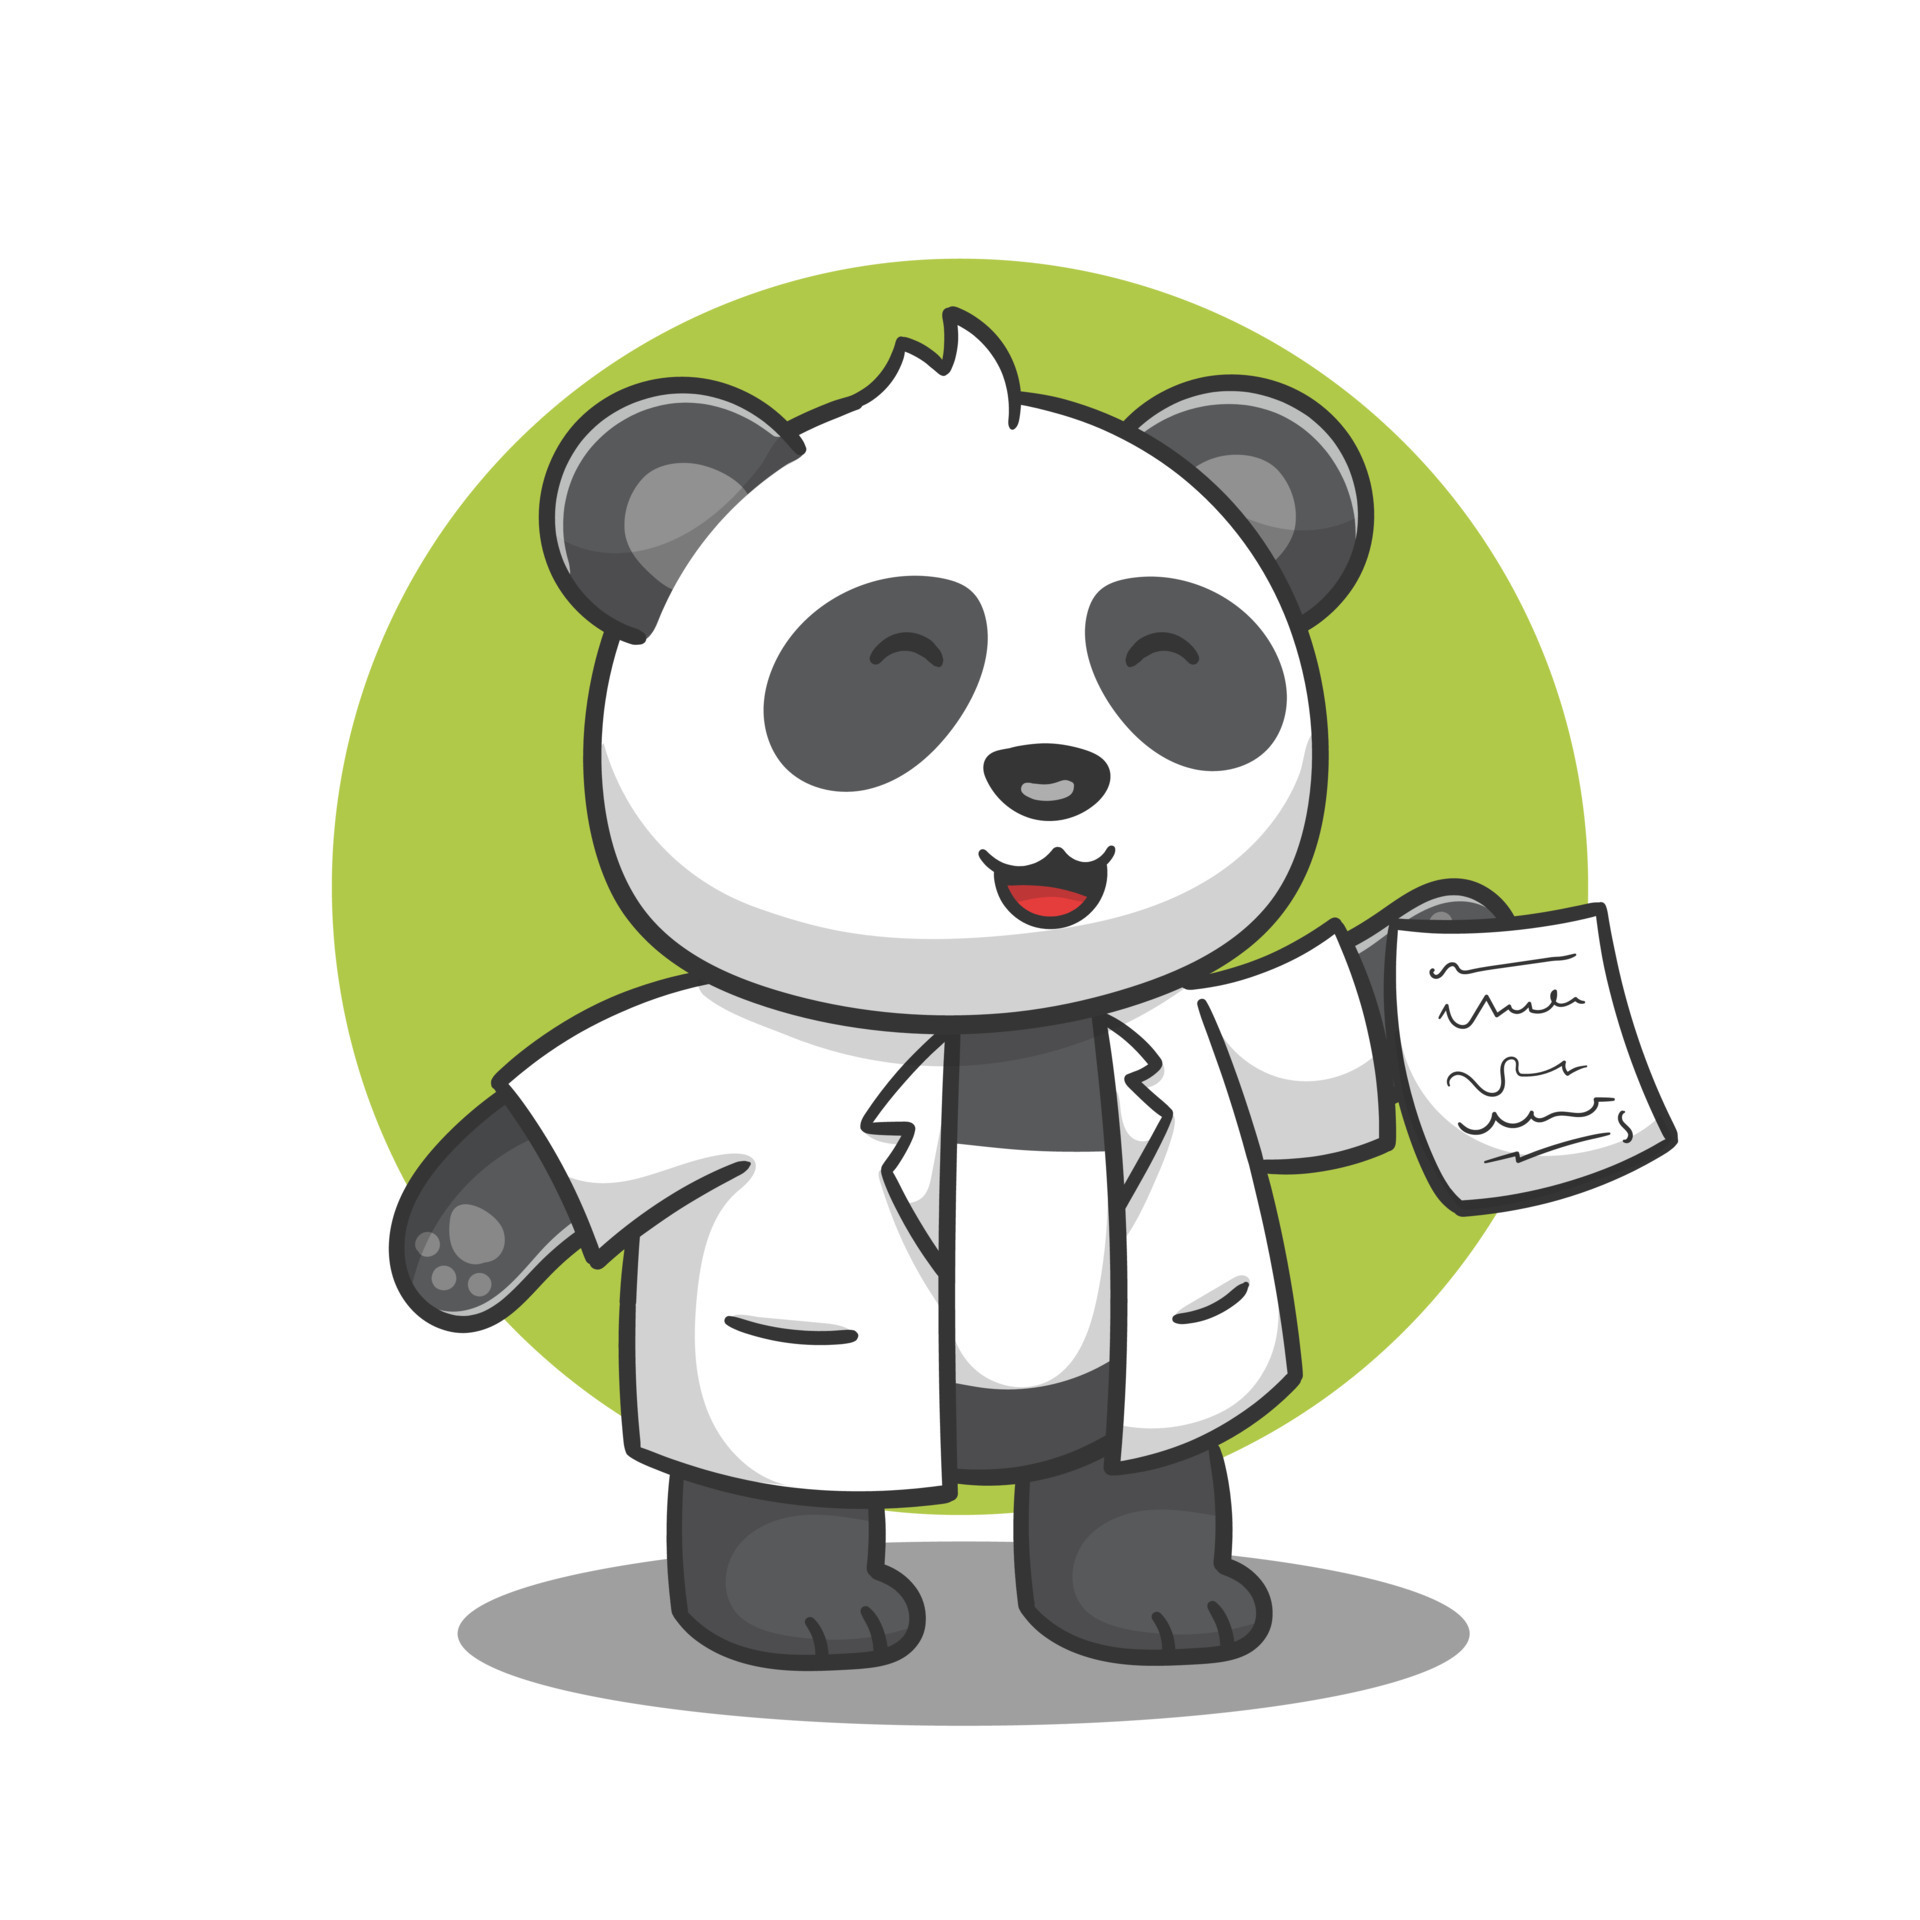 https://static.vecteezy.com/system/resources/previews/016/704/400/original/illustration-of-cute-cartoon-doctor-panda-brings-paper-design-free-vector.jpg